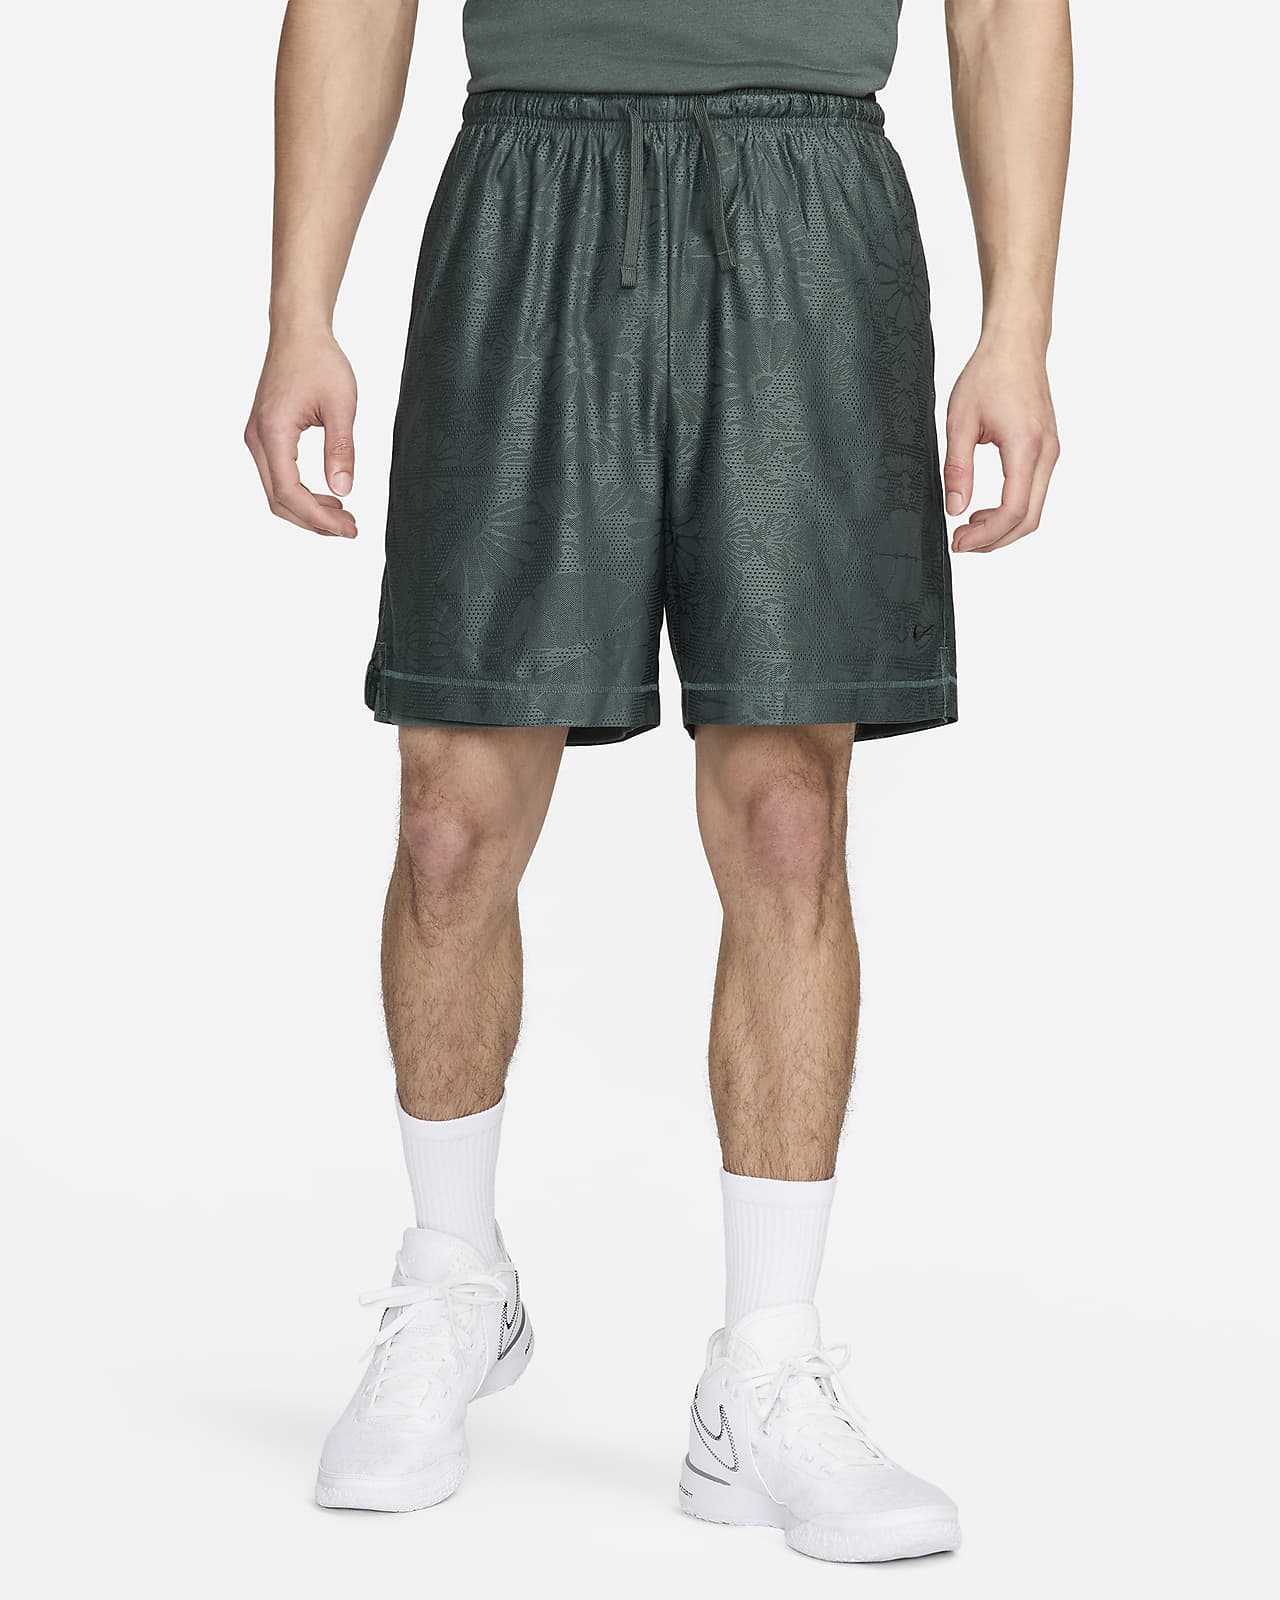 Nike Standard Issue Men's 6" Dri-FIT Reversible Basketball Shorts